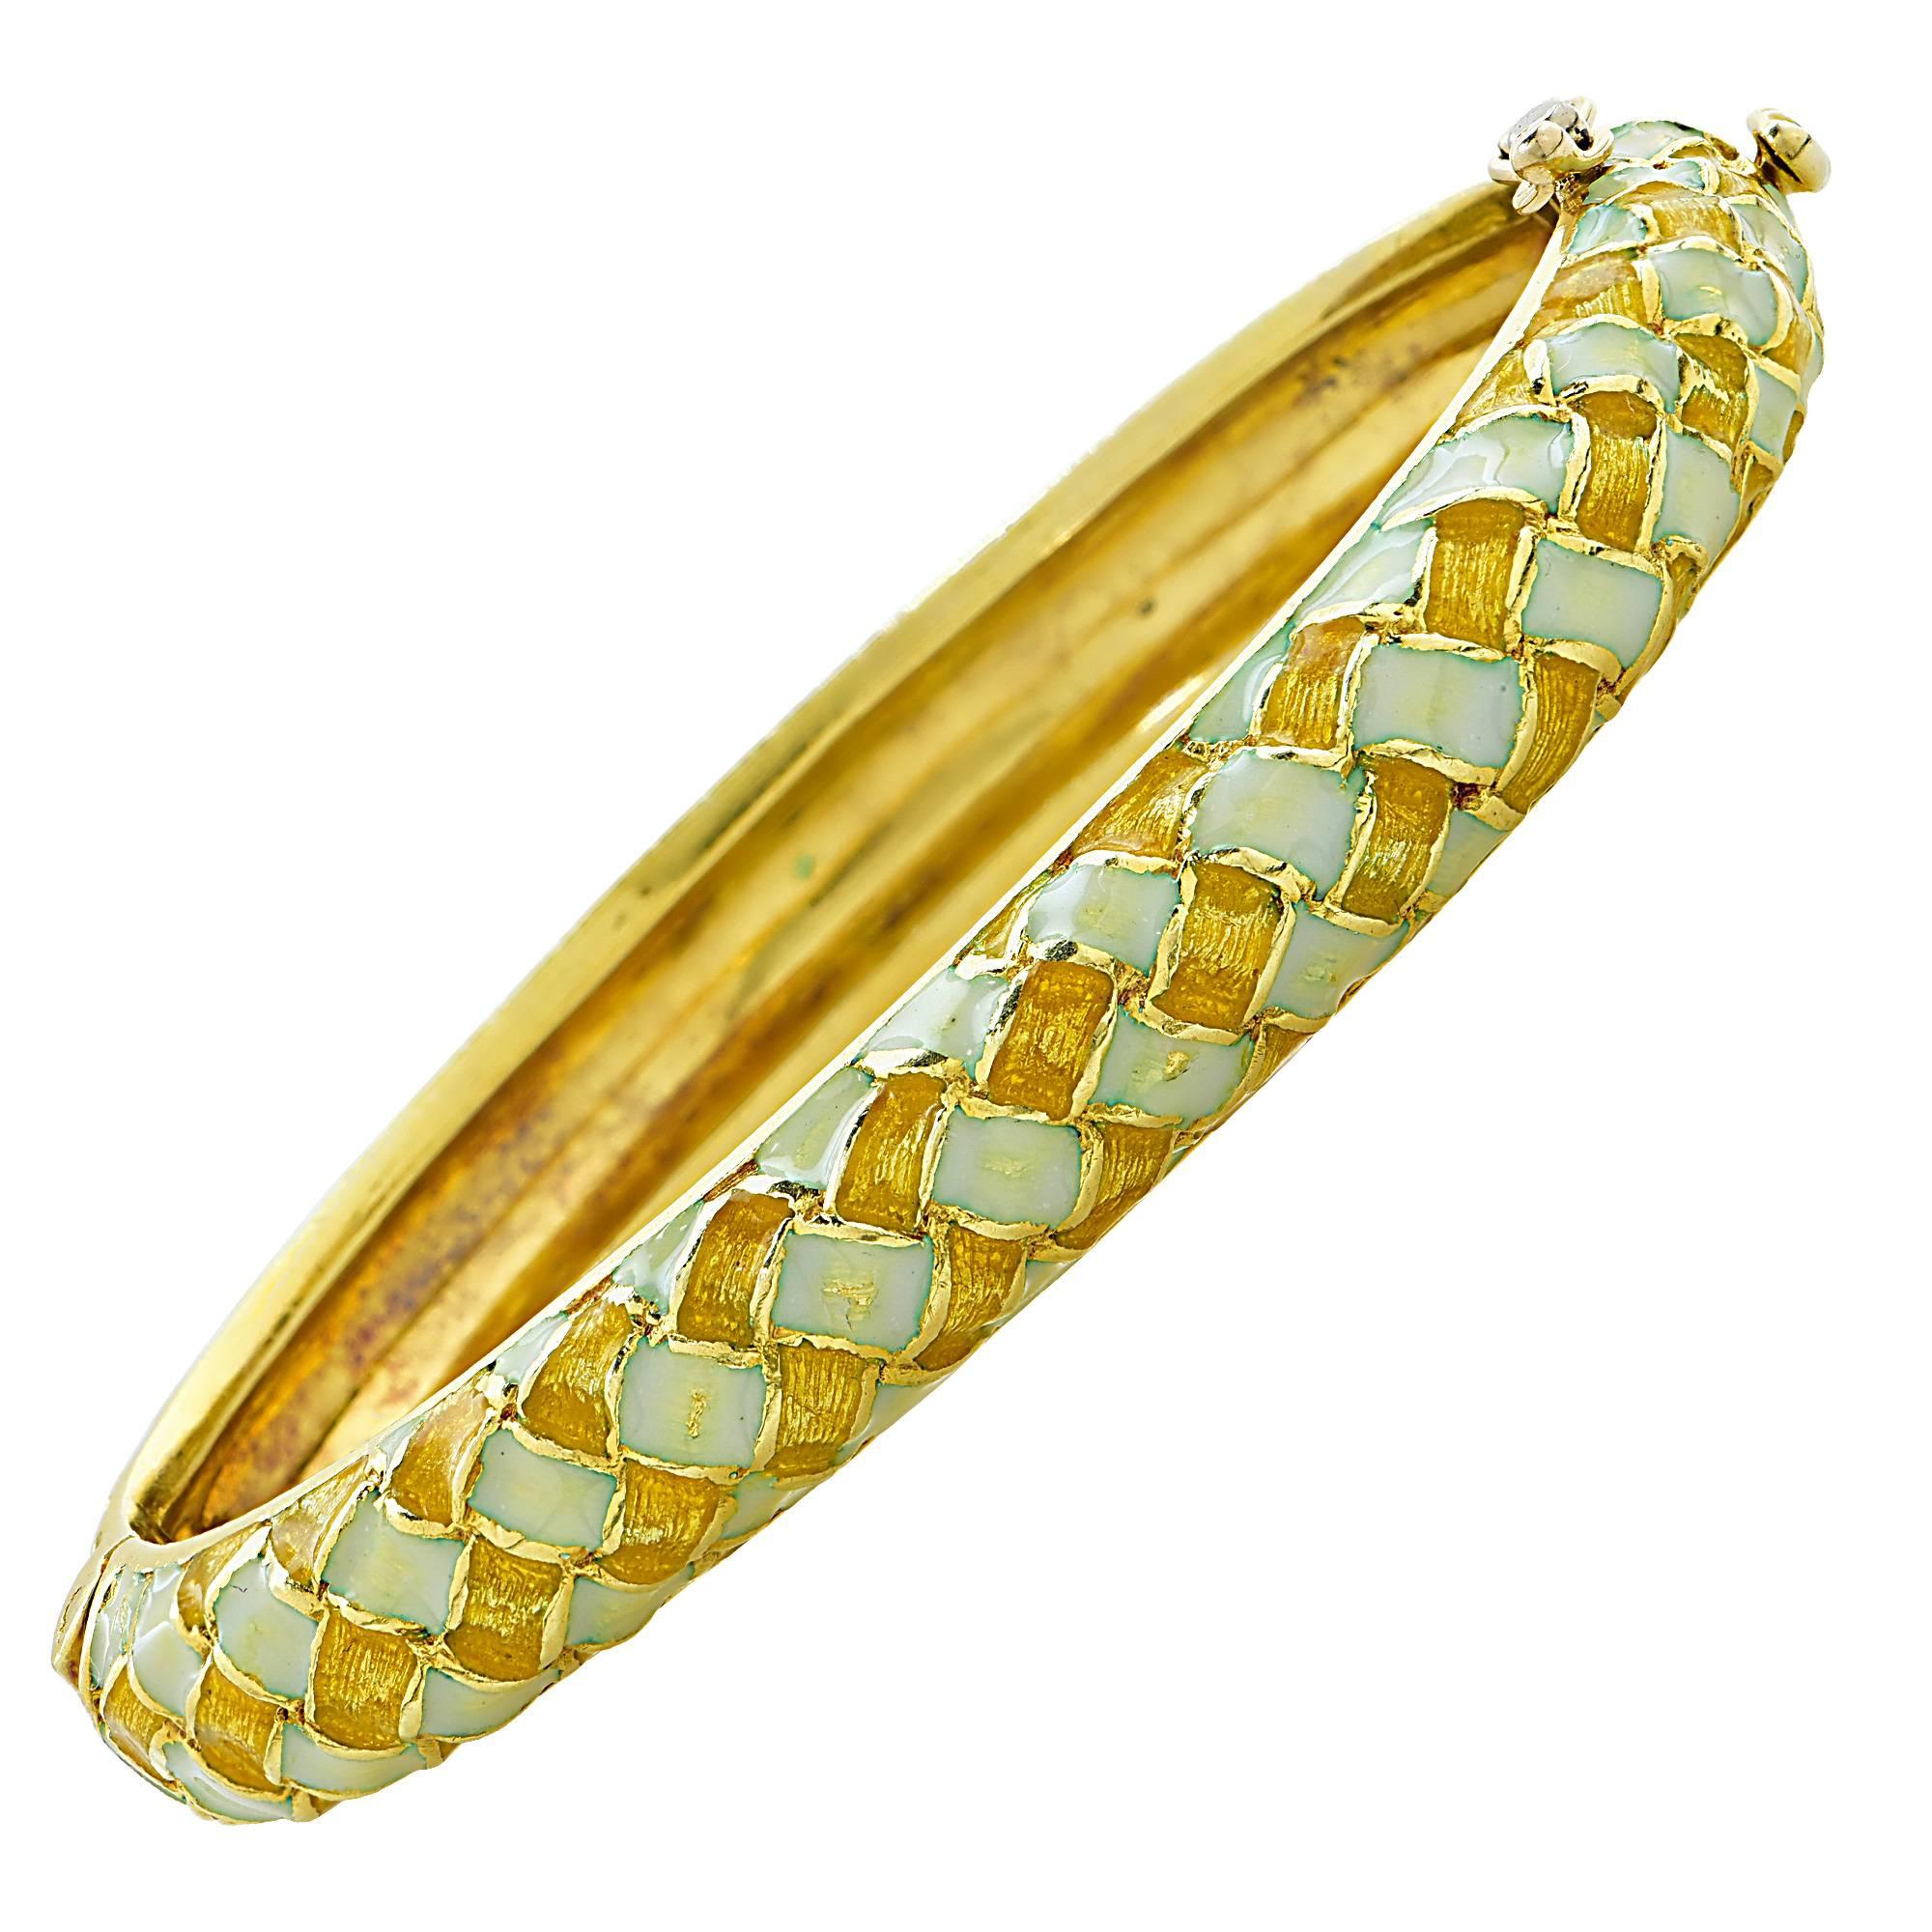 Tiffany & Co. Enamel Gold Bangle Bracelet